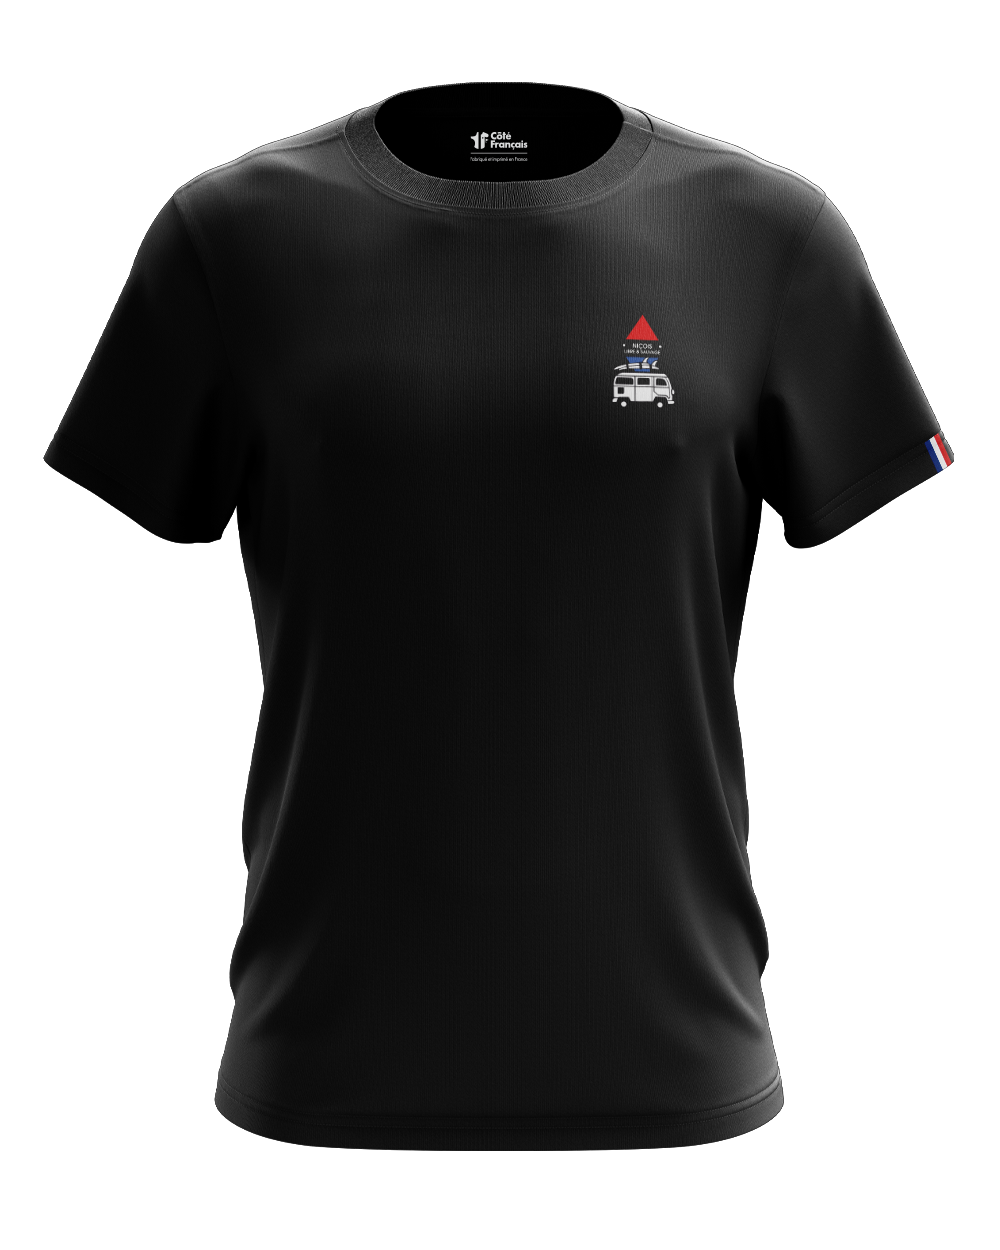 T-Shirt "Niçois libre & sauvage" - noir